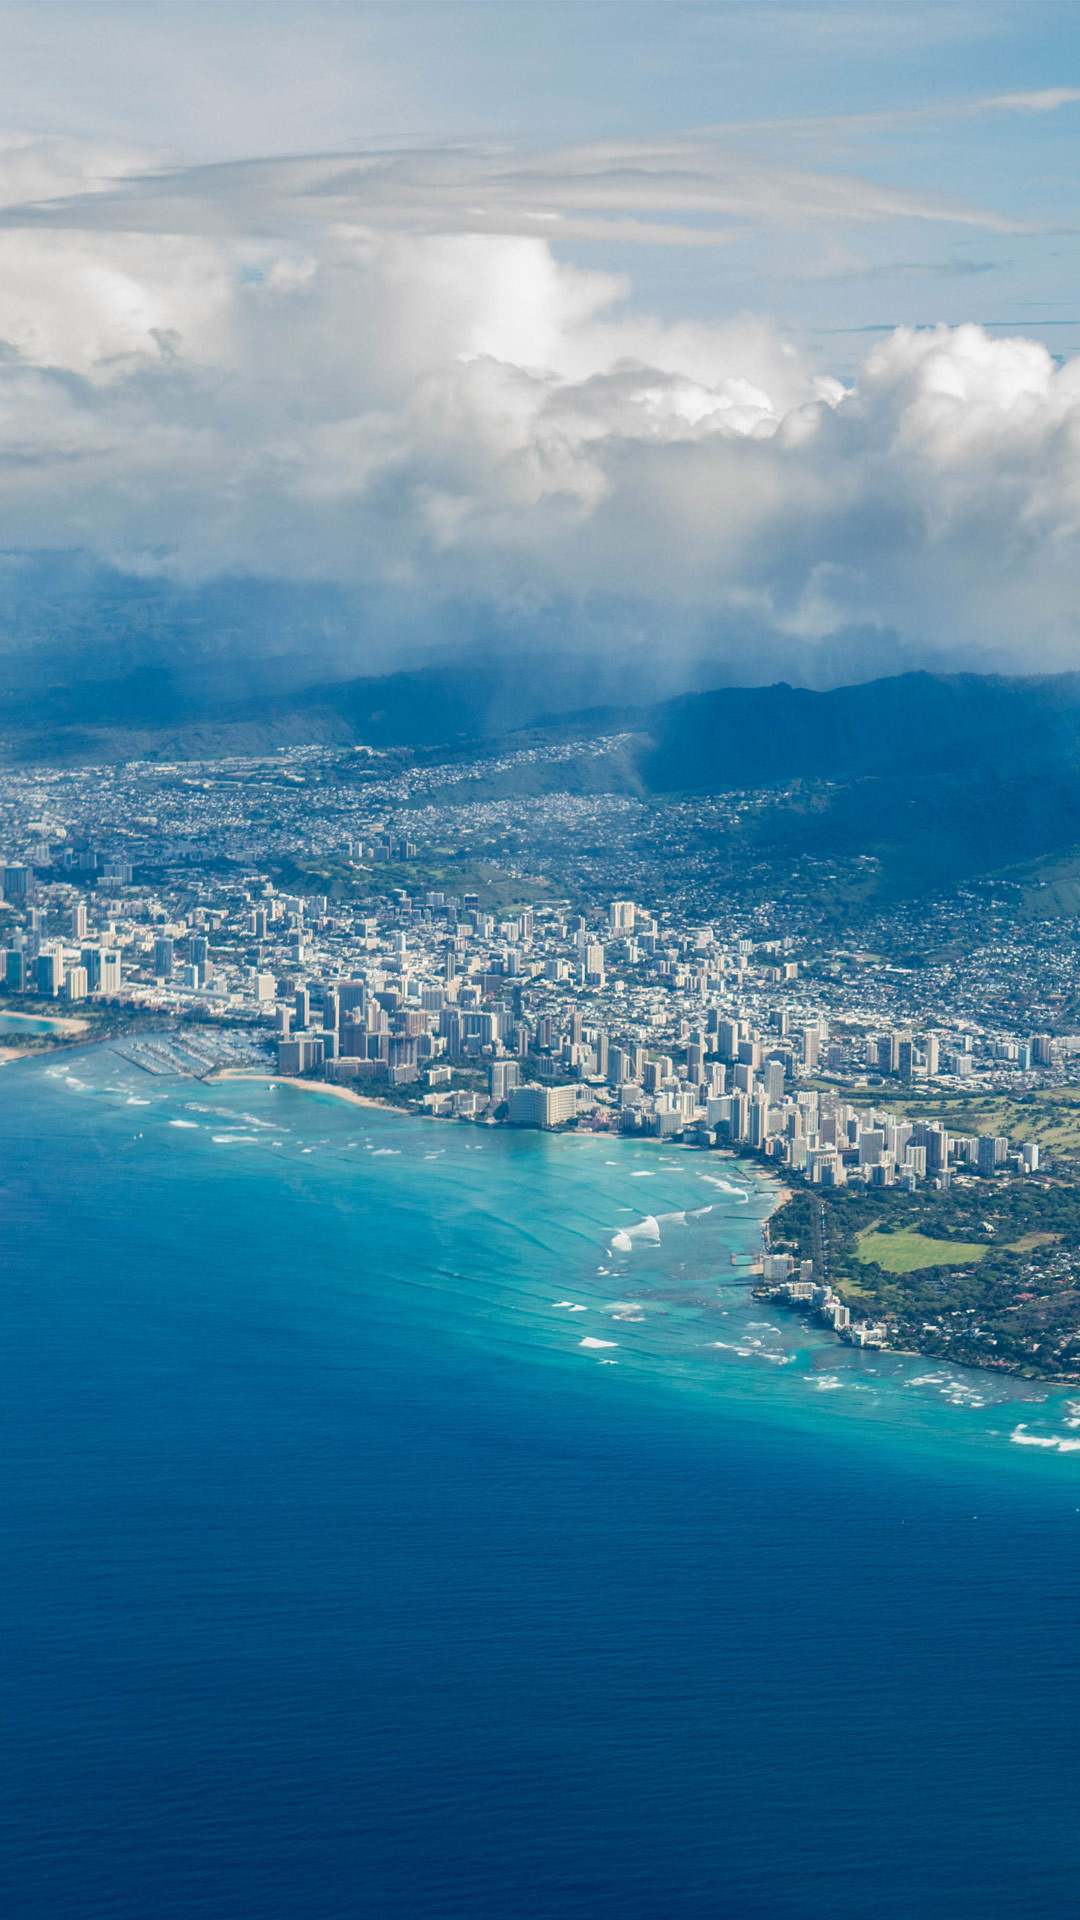 Honolulu: Stunning iPhone wallpapers of Oahu. 1080x1920 Full HD Wallpaper.